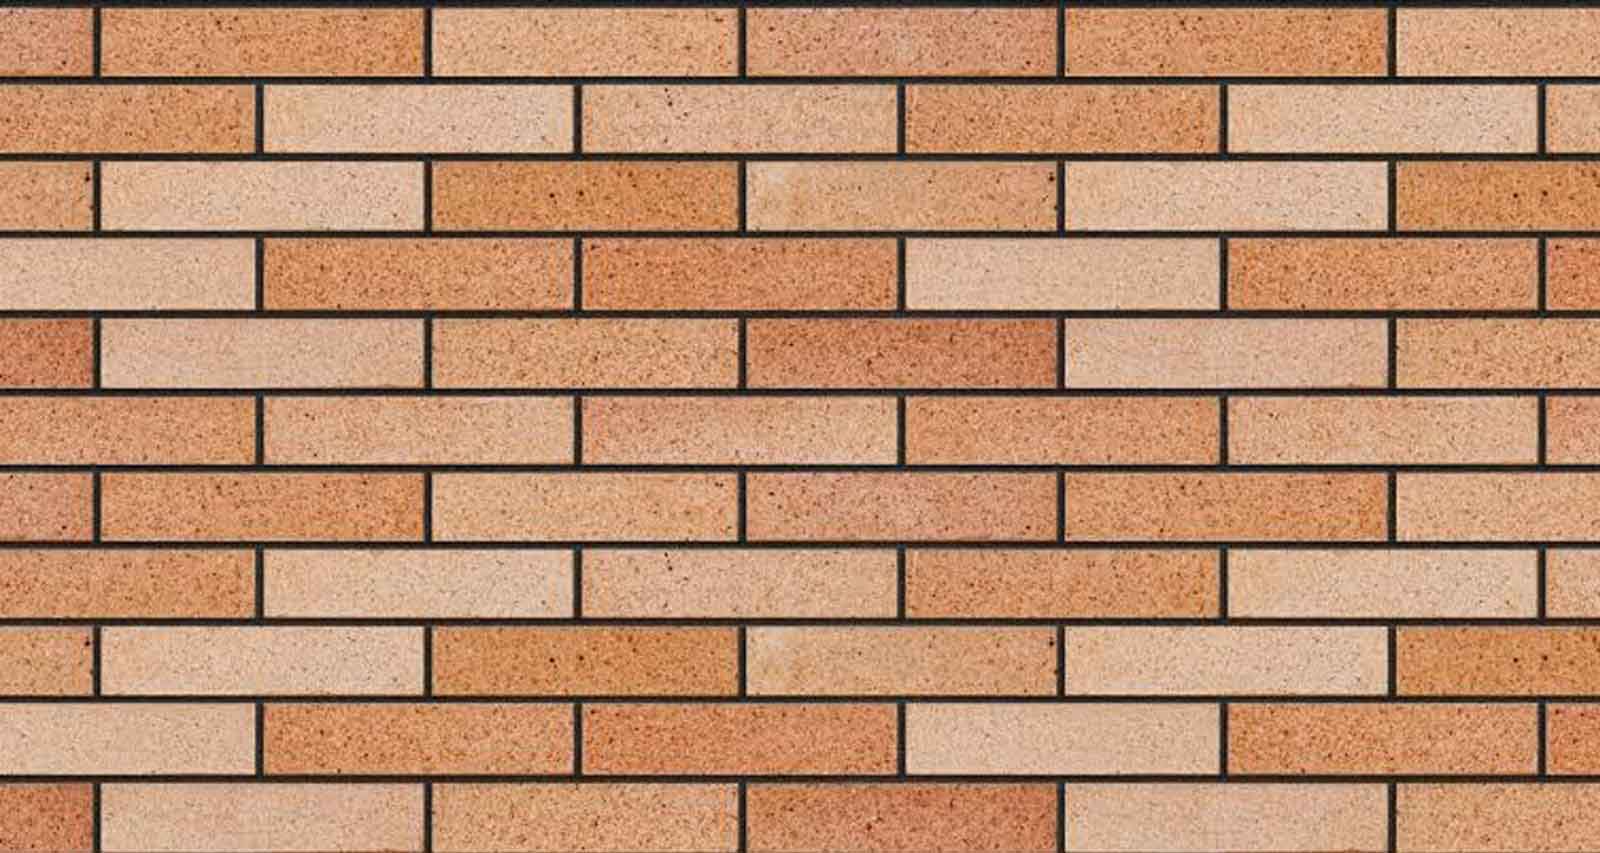 Highland Bricks Wall Tiles Design Price in Pakistan